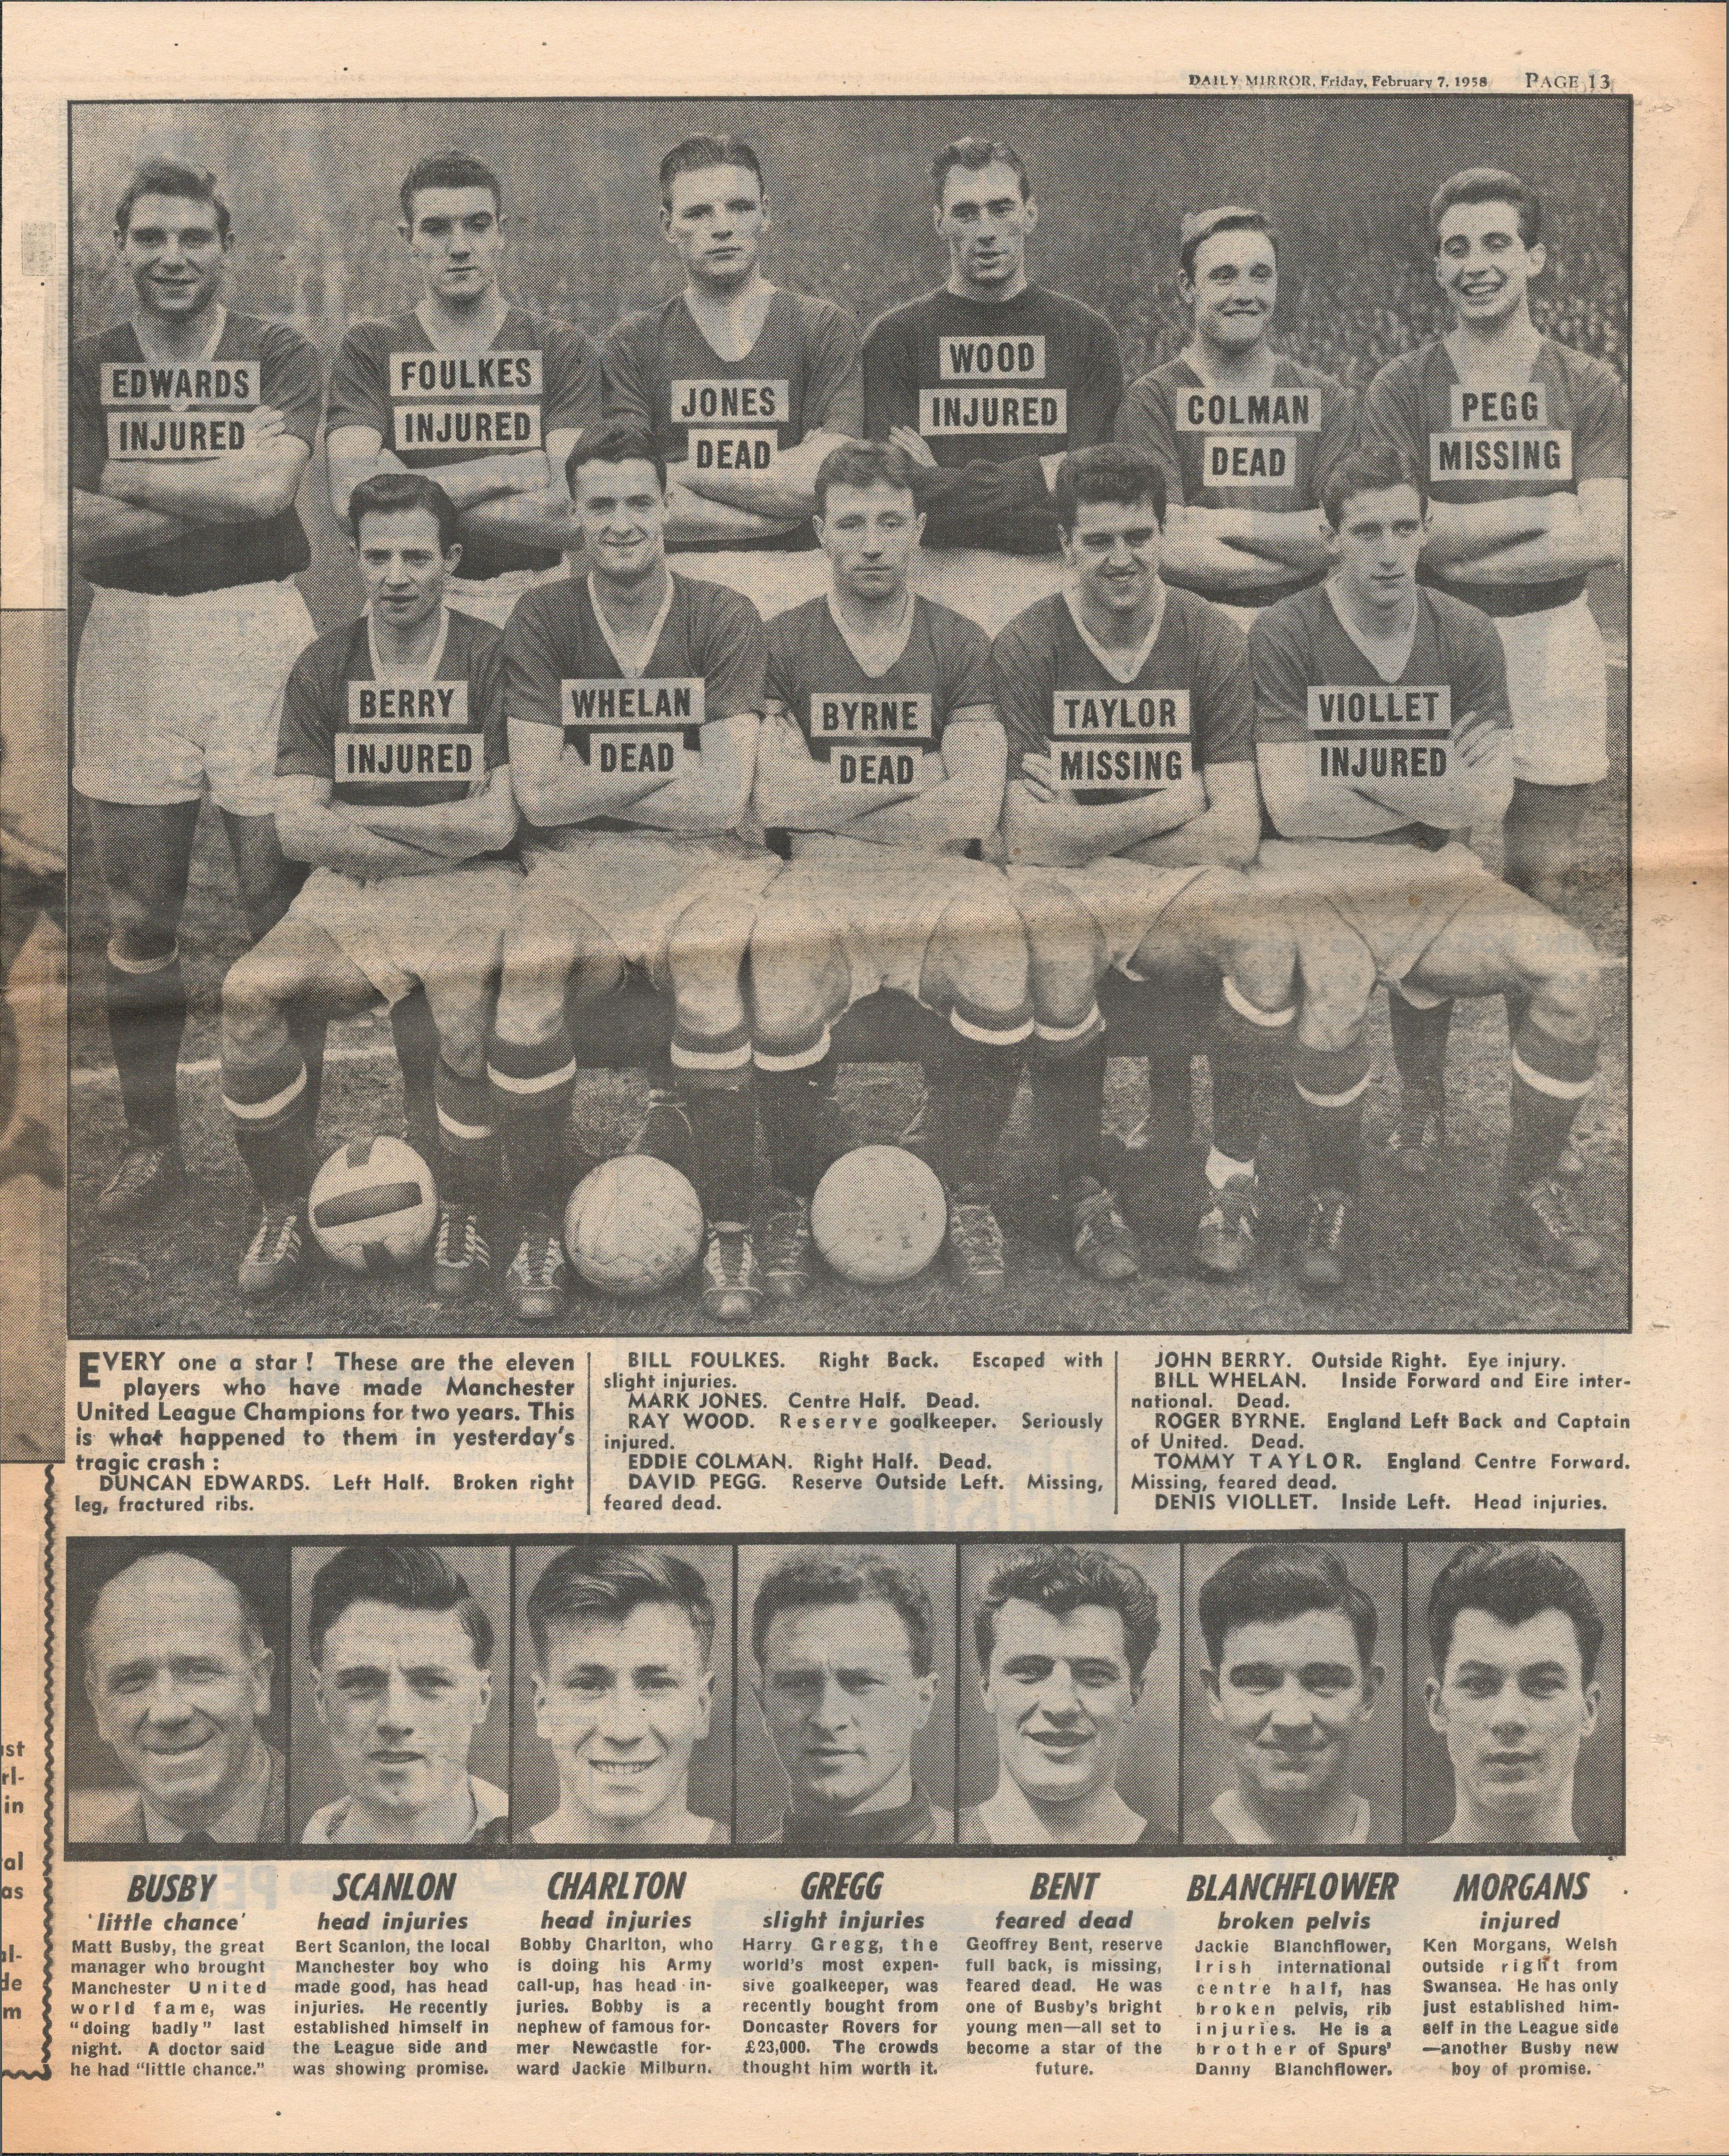 Manchester United Munich 1958 Original Daily Mirror Newspaper - Image 4 of 5